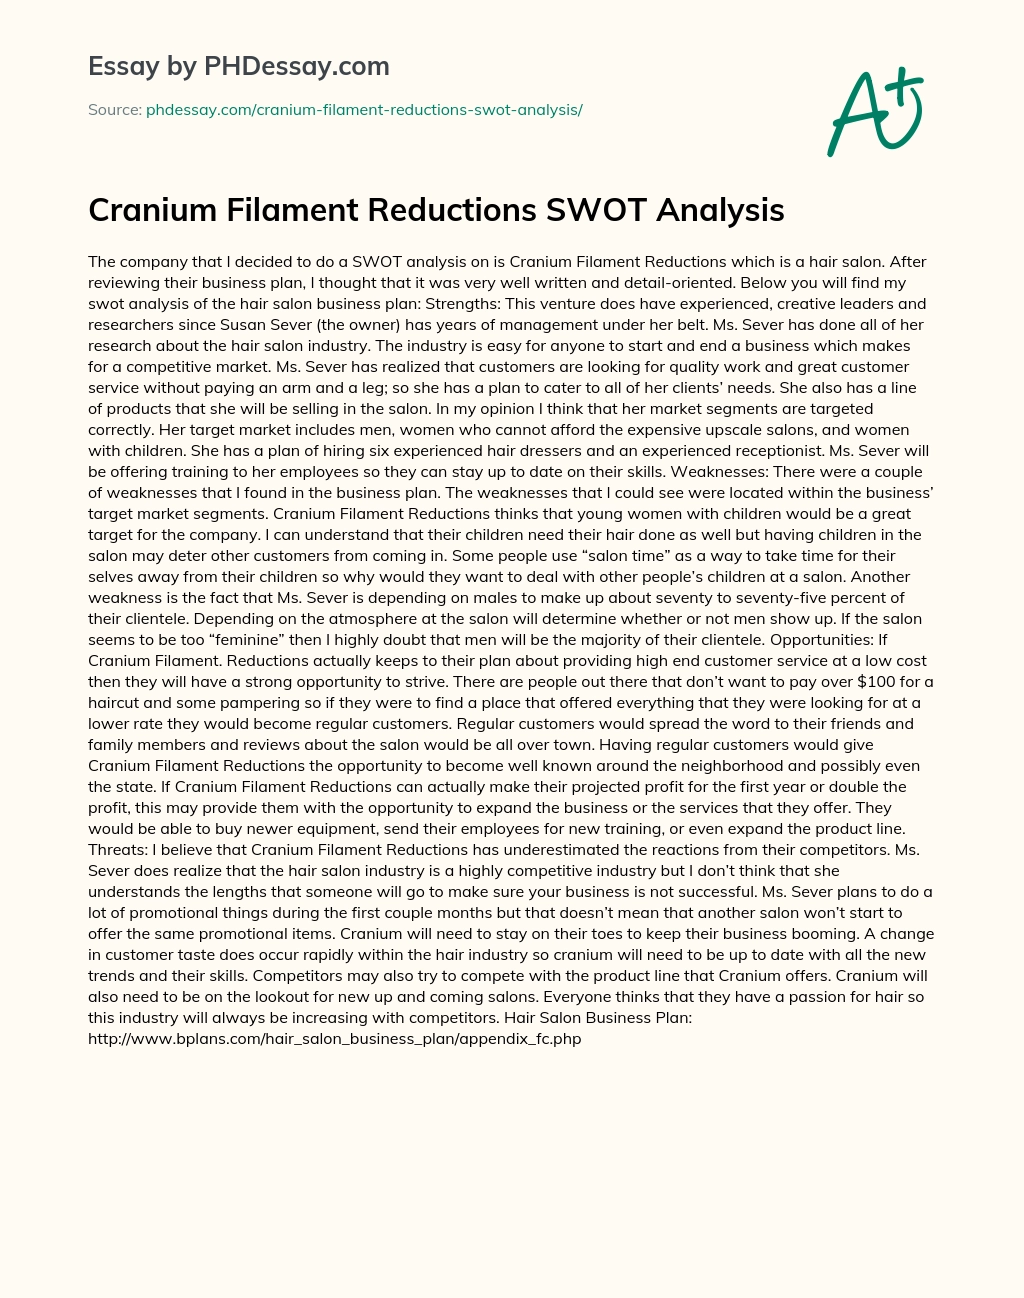 Cranium Filament Reductions SWOT Analysis essay